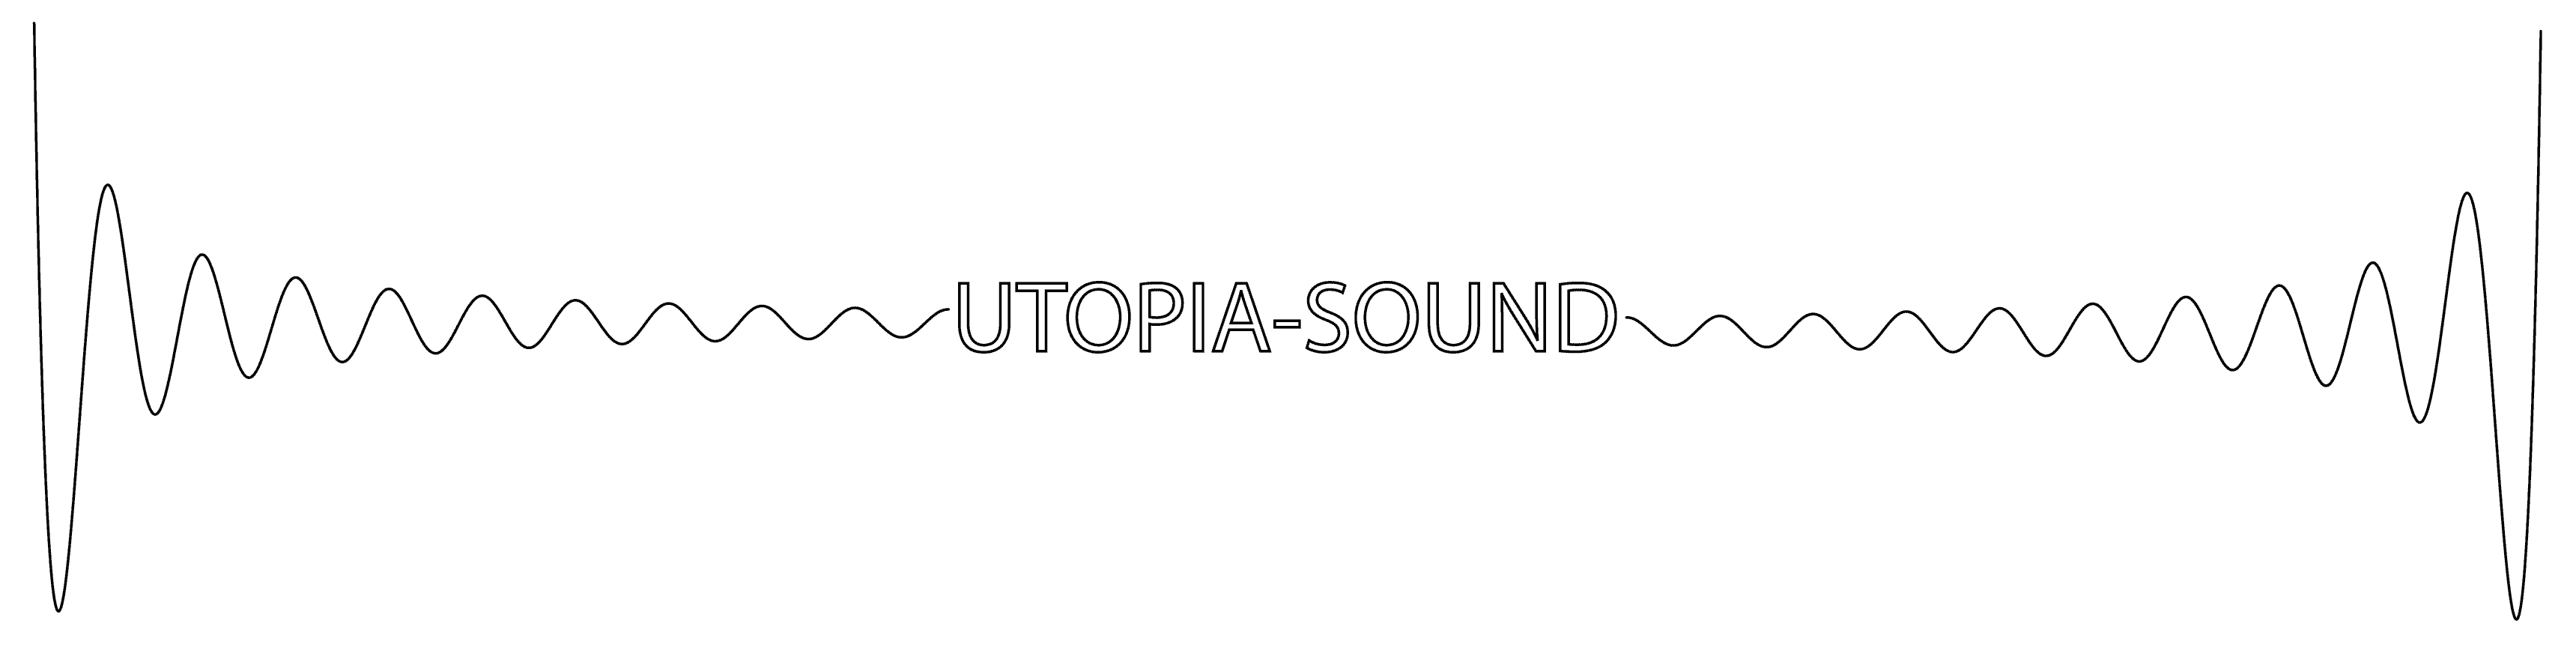 Utopia-Sound